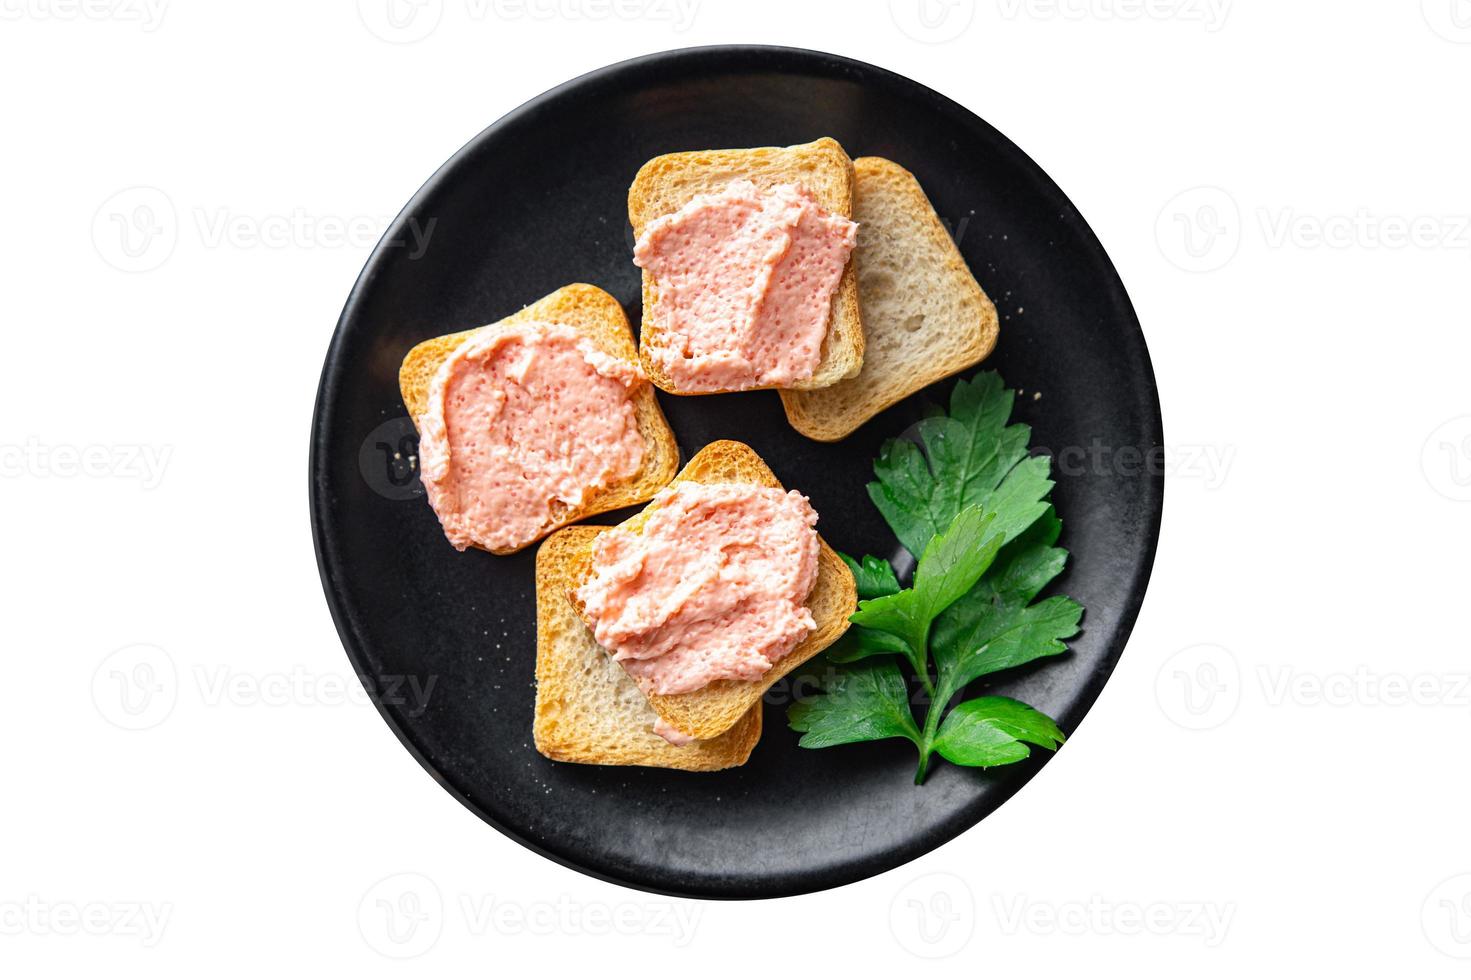 Capelin huevas caviar smorrebrod sandwich alimentos antecedentes foto